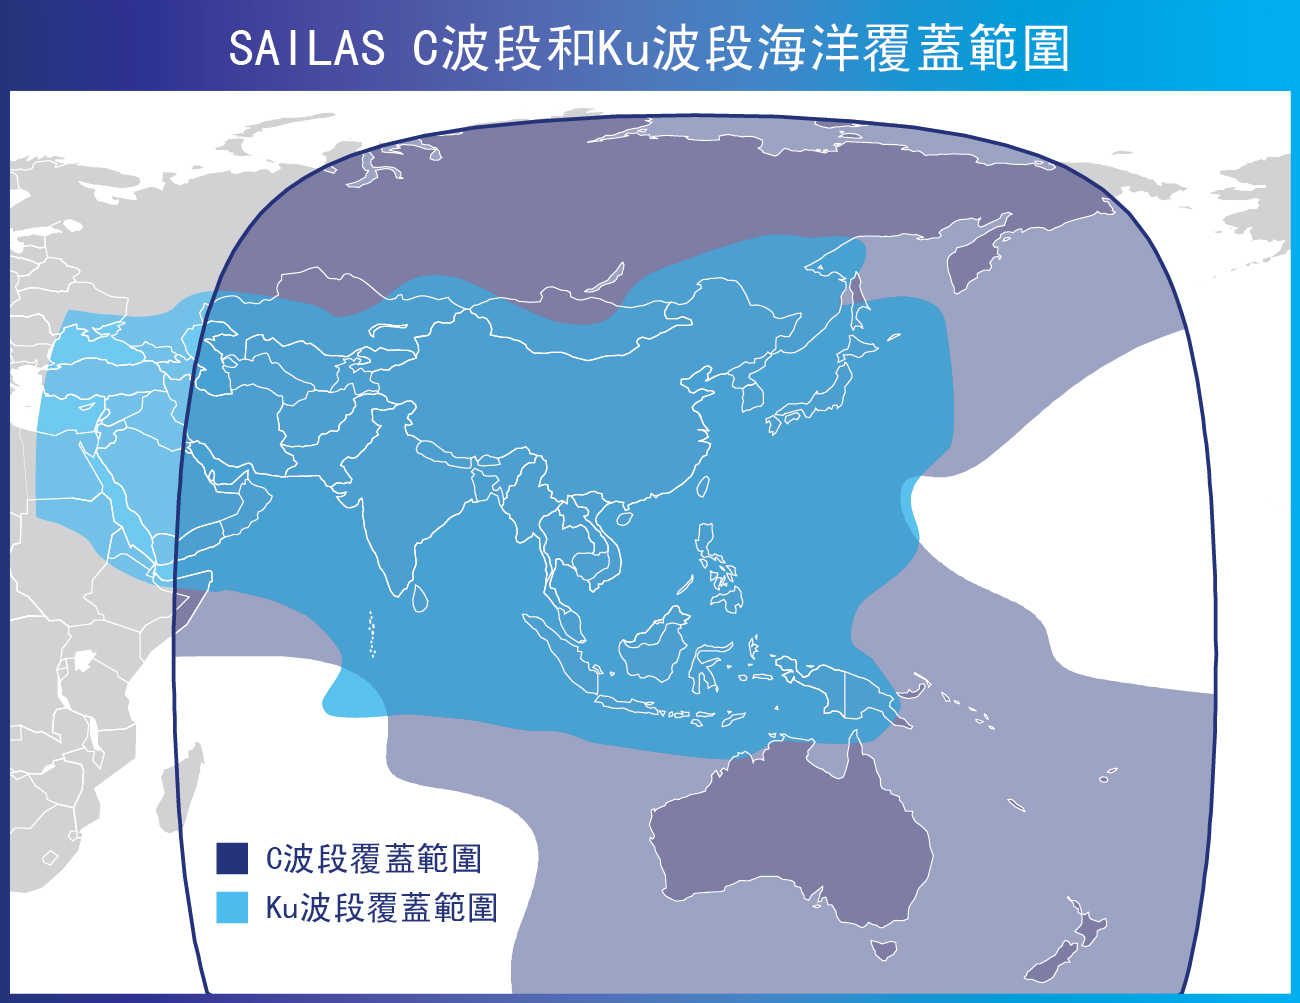 SAILAS AsiaSat Maritime Service Expansion (Chi)